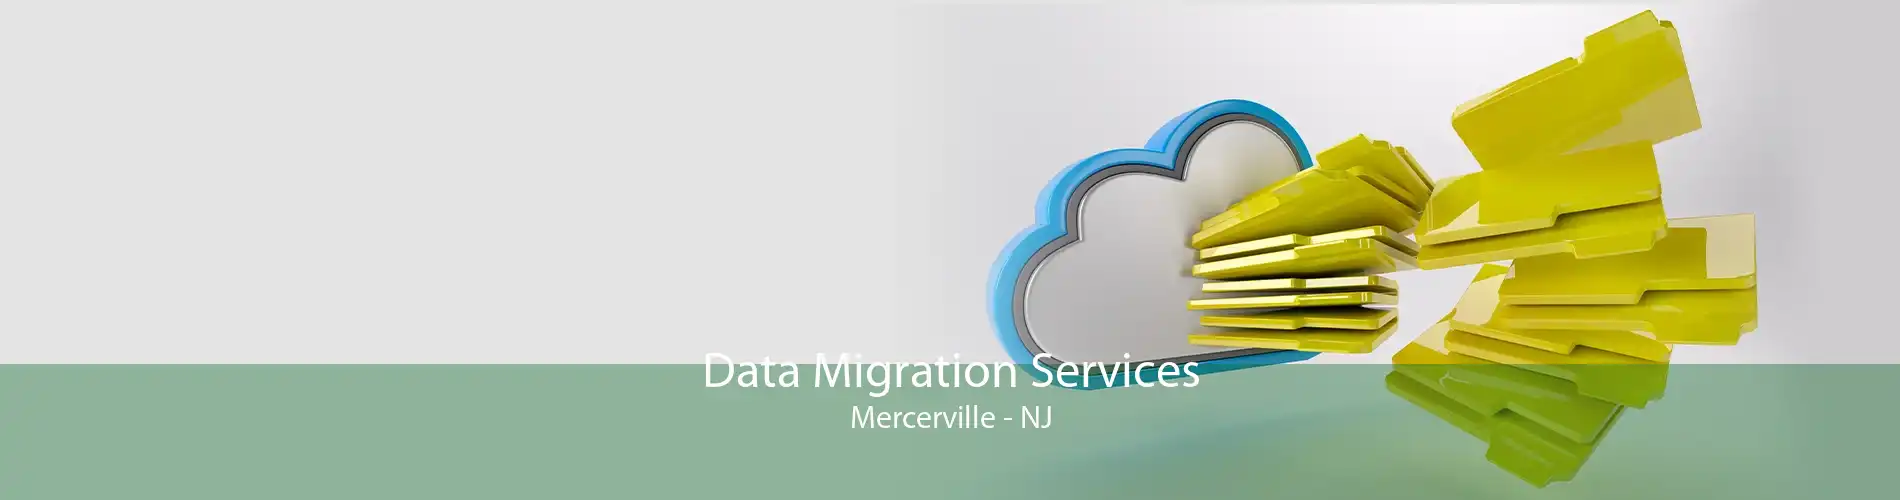 Data Migration Services Mercerville - NJ